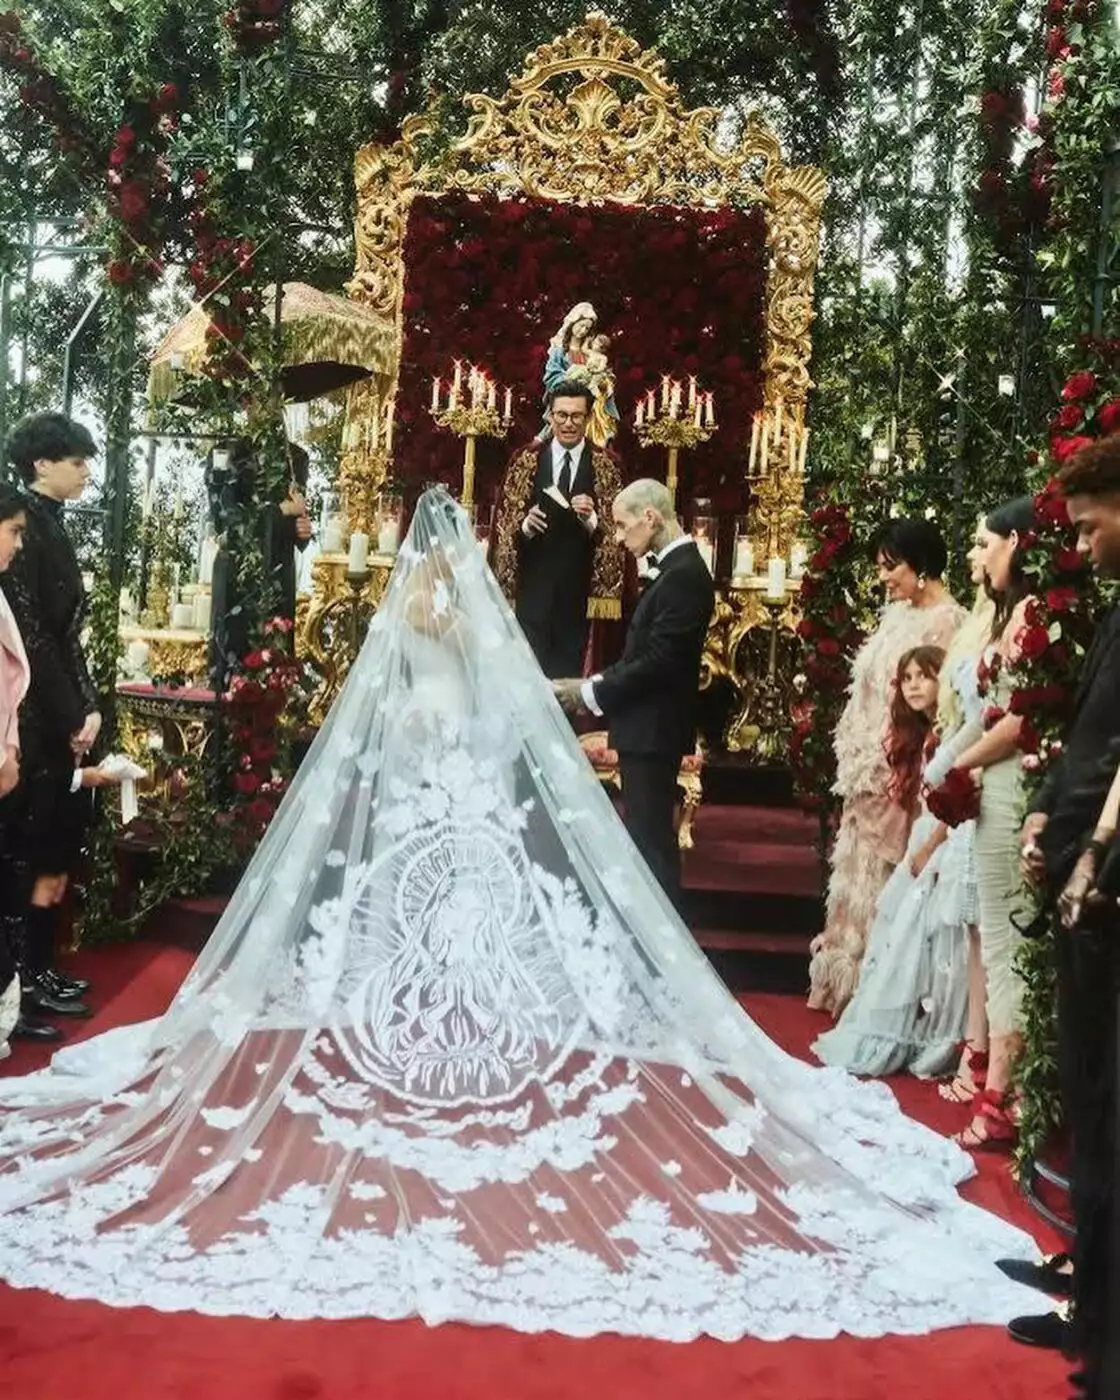 Kourtney Kardashian – Travis Barker: Οι πρώτες εικόνες από τον θρησκευτικό γάμο στην Ιταλία